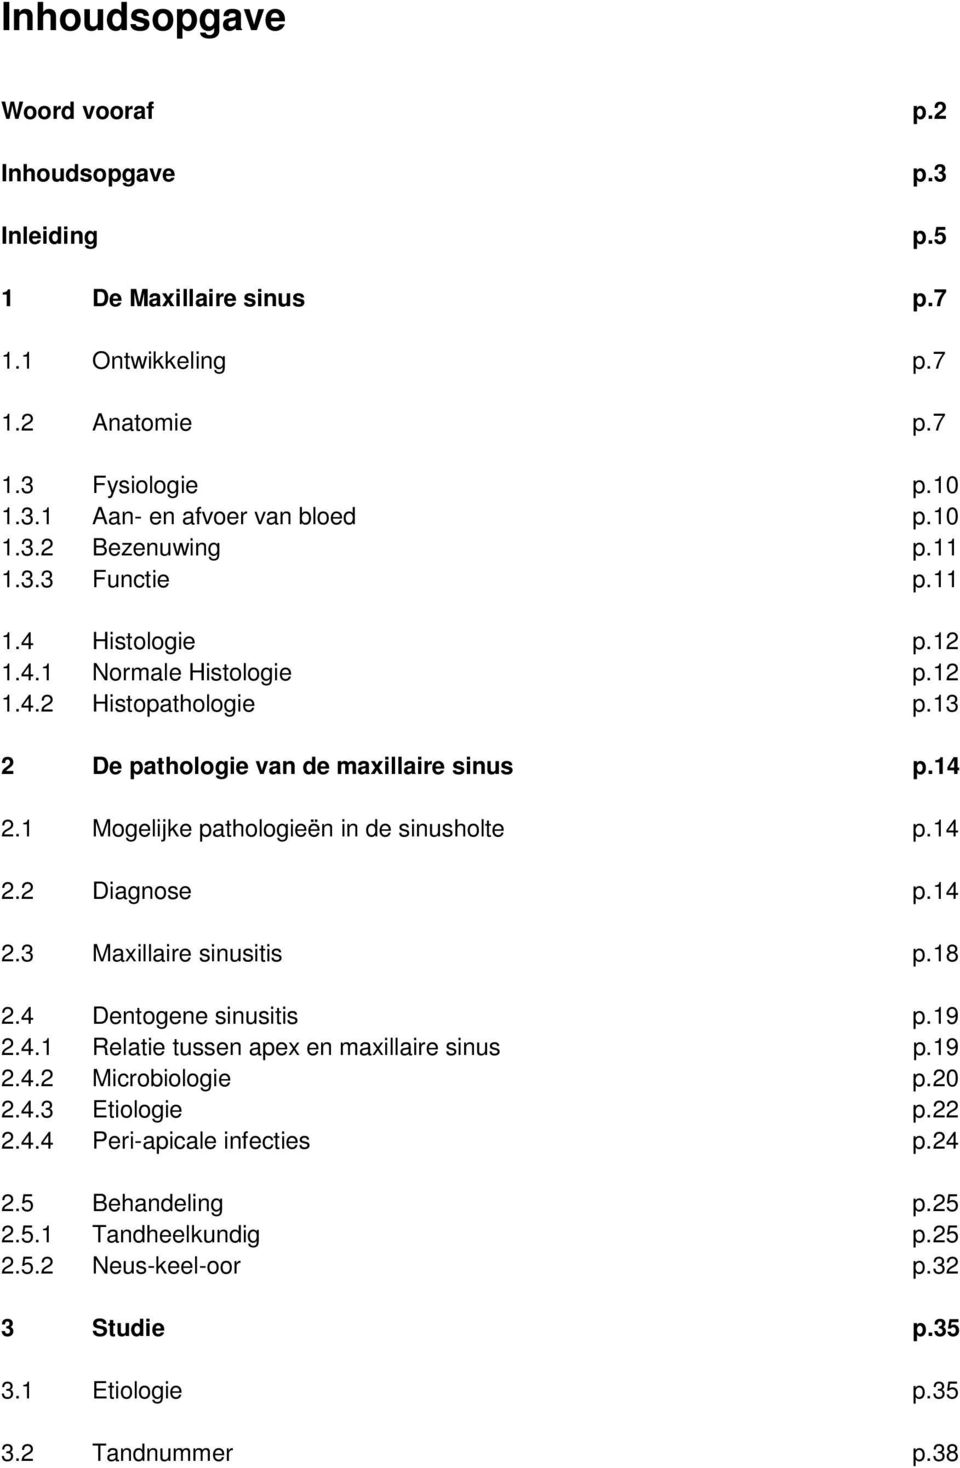 1 Mogelijke pathologieën in de sinusholte p.14 2.2 Diagnose p.14 2.3 Maxillaire sinusitis p.18 2.4 Dentogene sinusitis p.19 2.4.1 Relatie tussen apex en maxillaire sinus p.19 2.4.2 Microbiologie p.